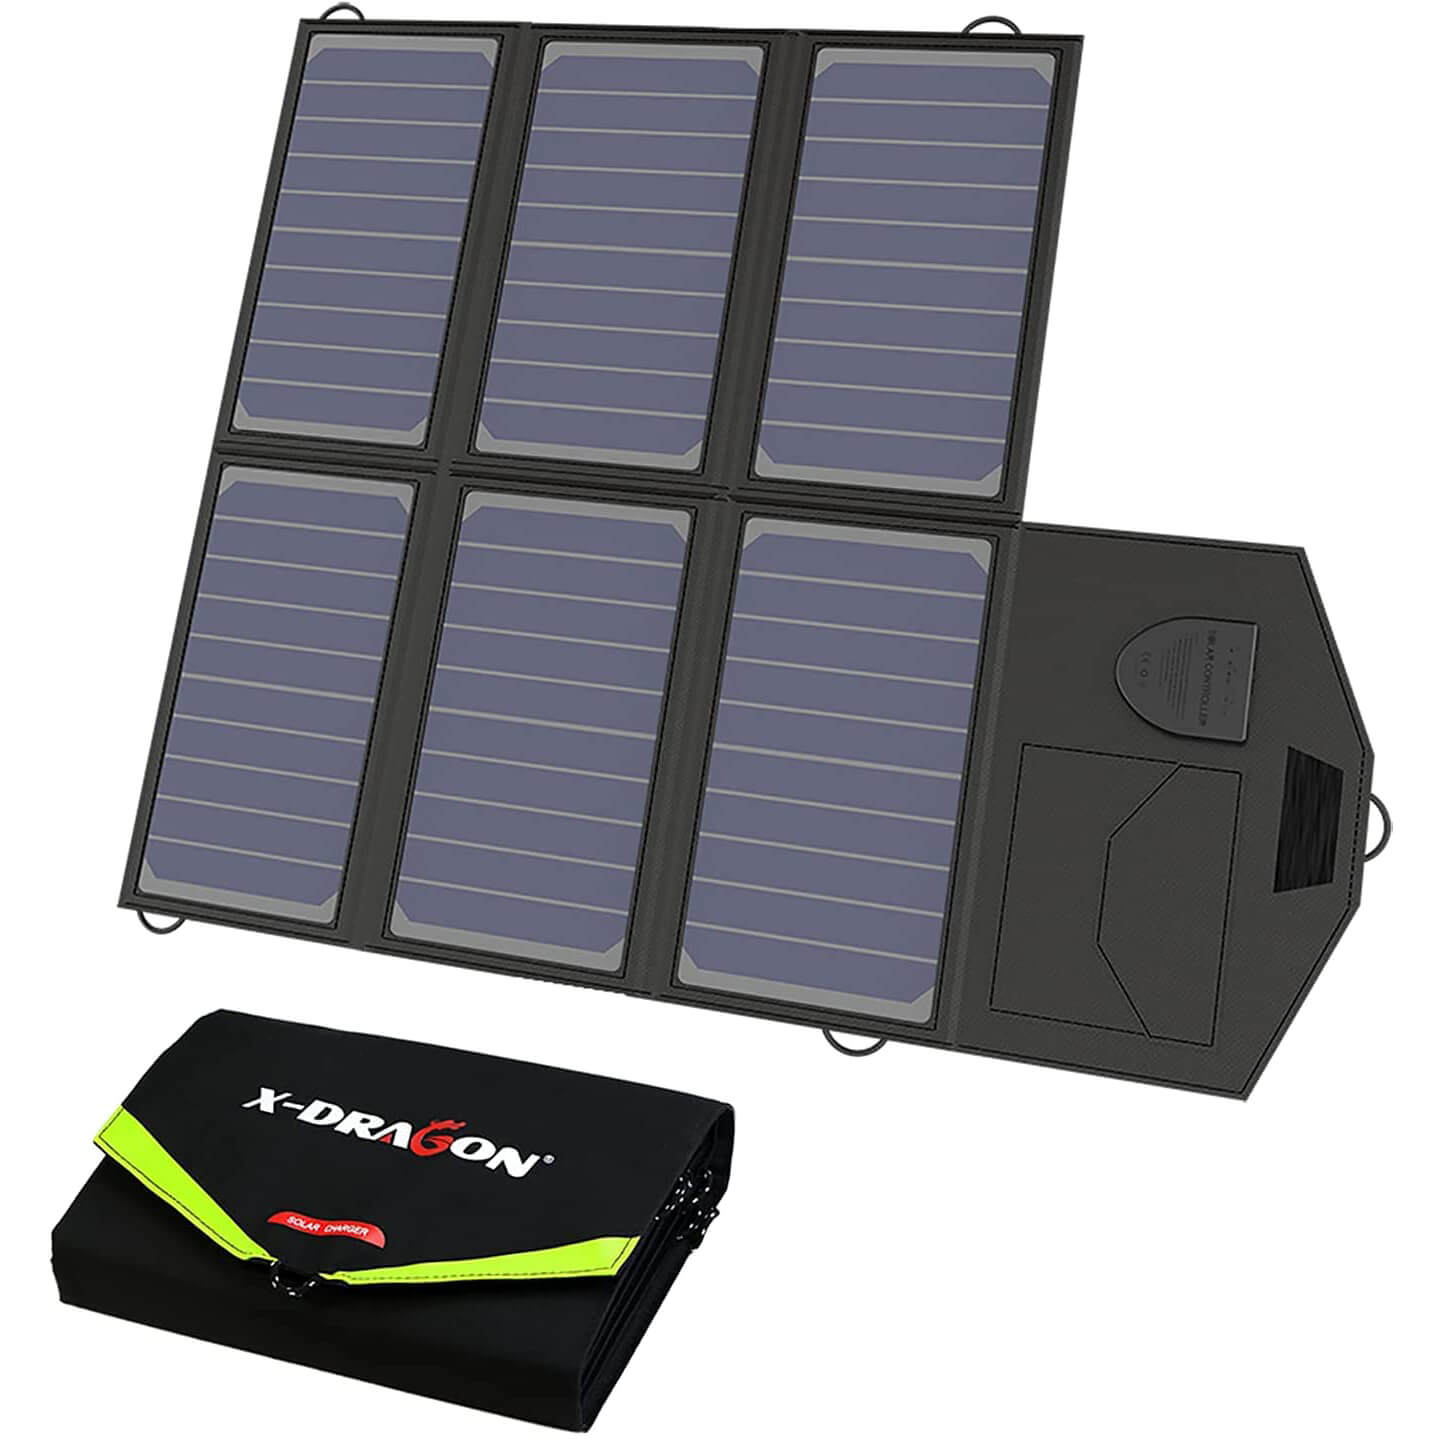 X-Dragon Portable Solar Laptop Charger